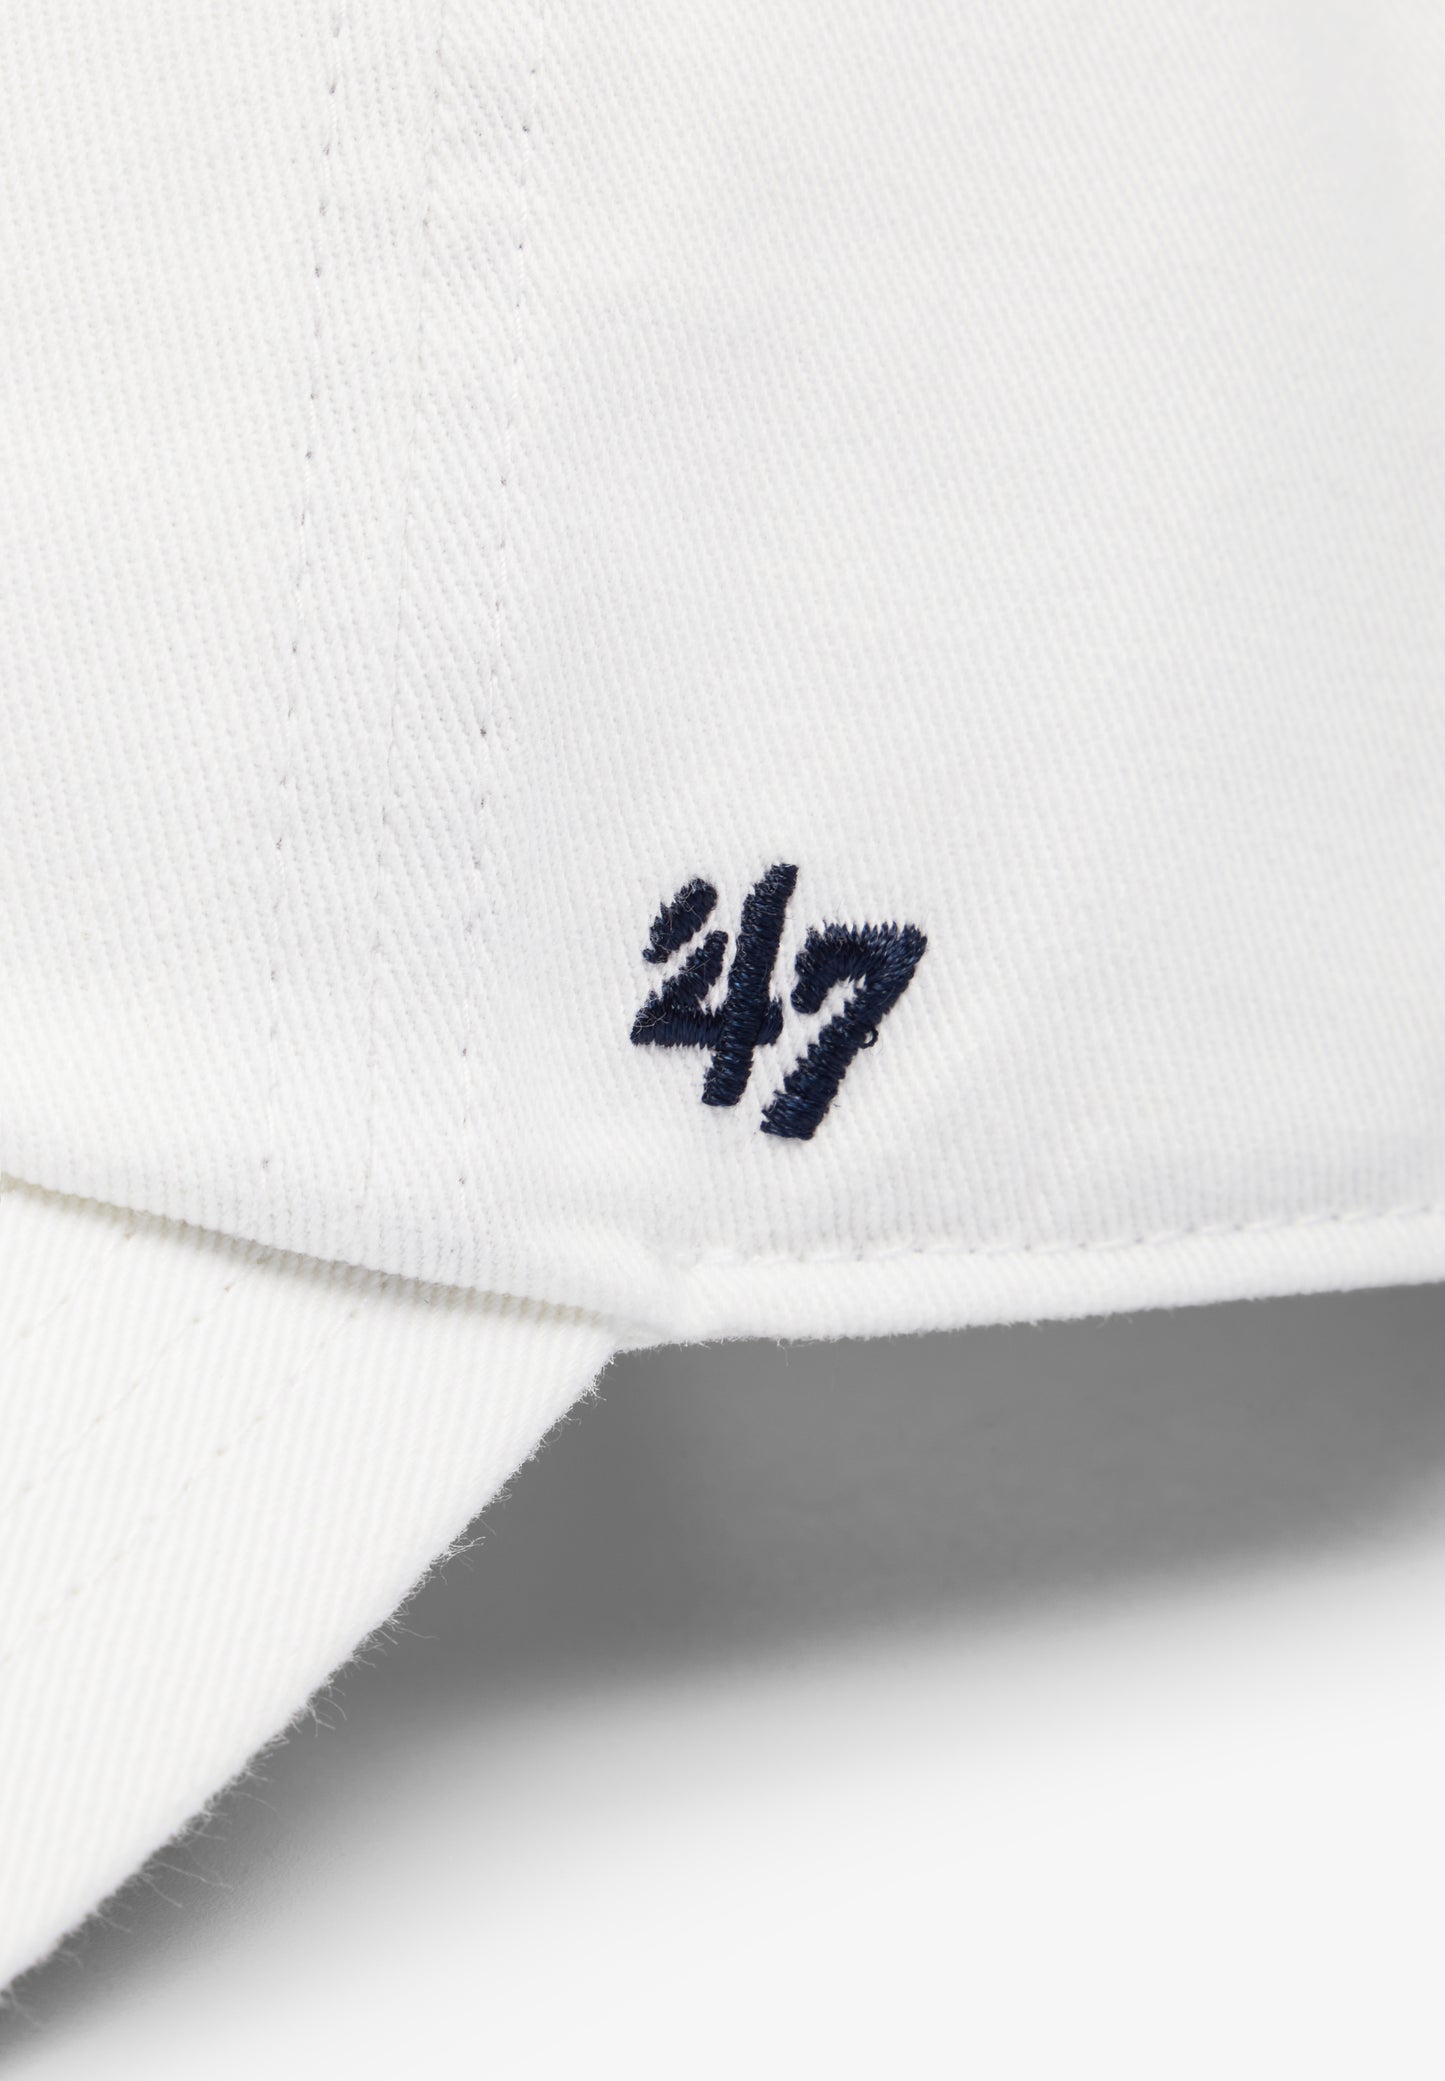 47 BRAND | MLB NEW YORK YANKEES '47 CLEAN UP